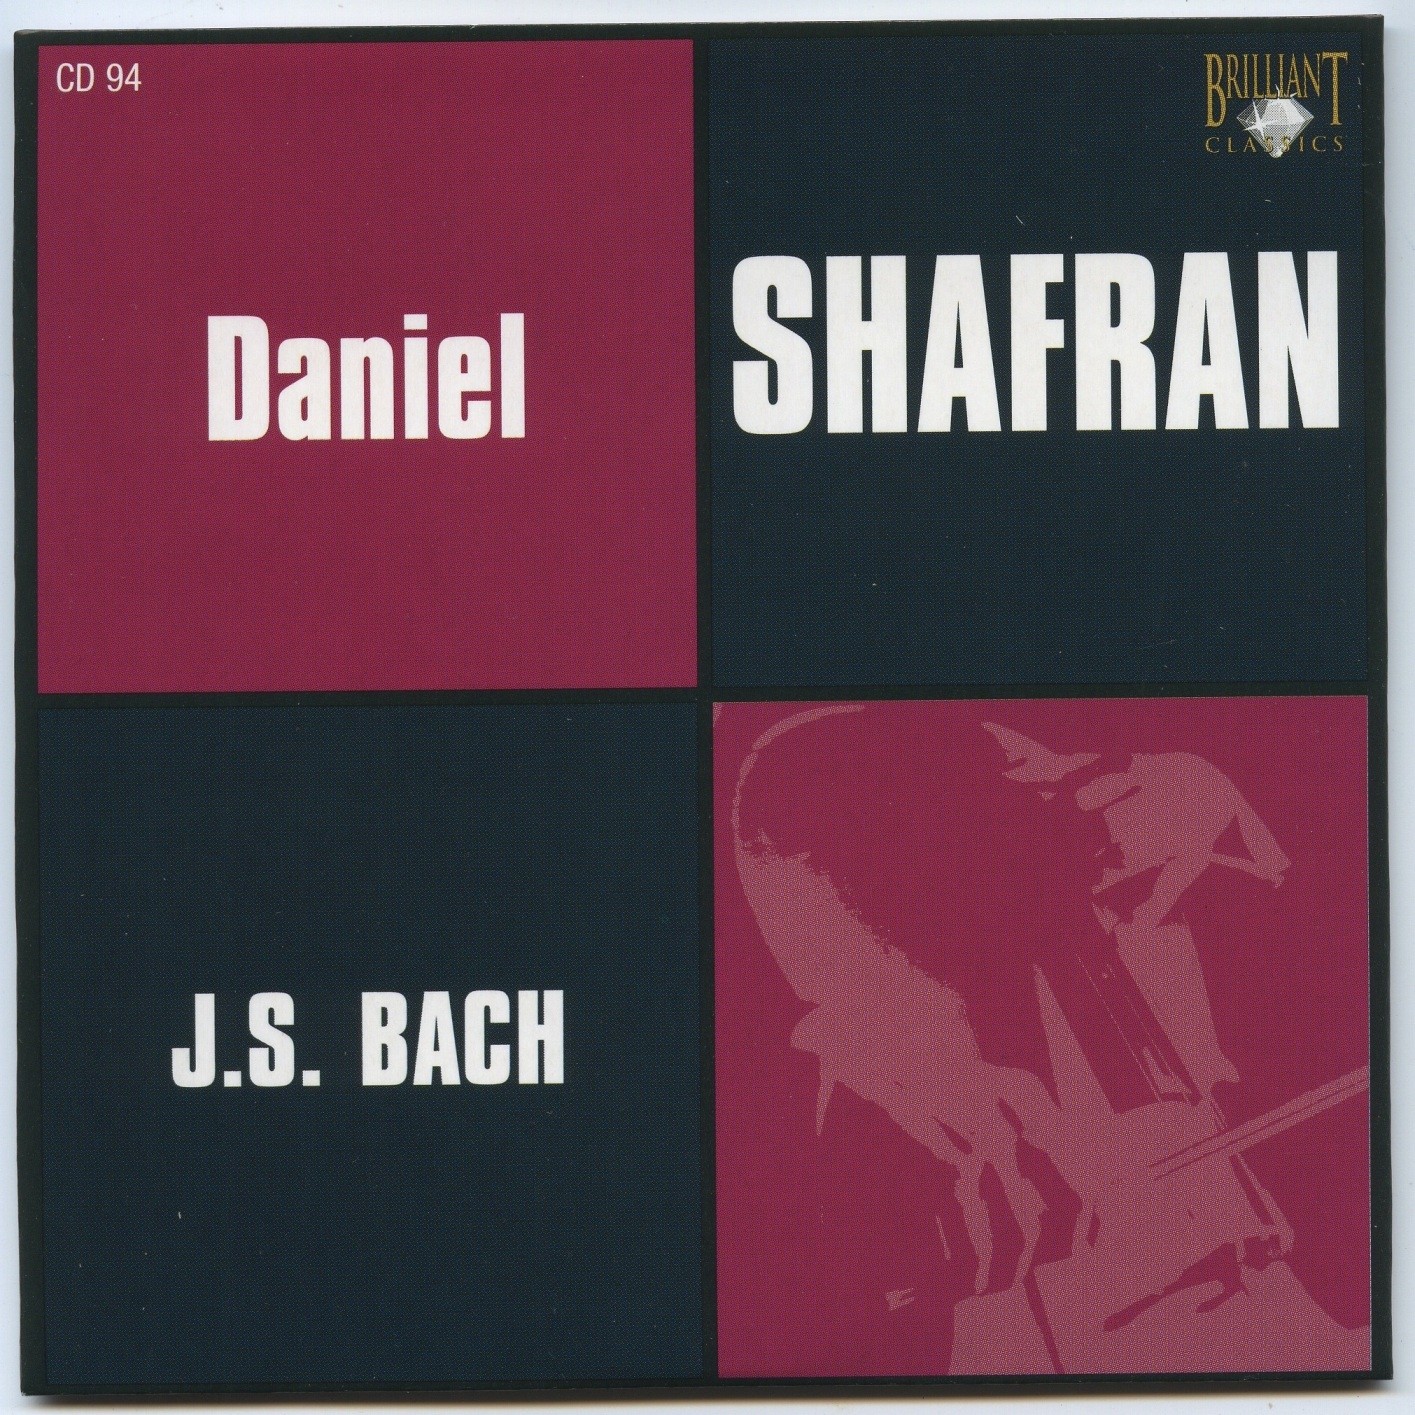 Russian legends - Daniel Shafran [7 CD]